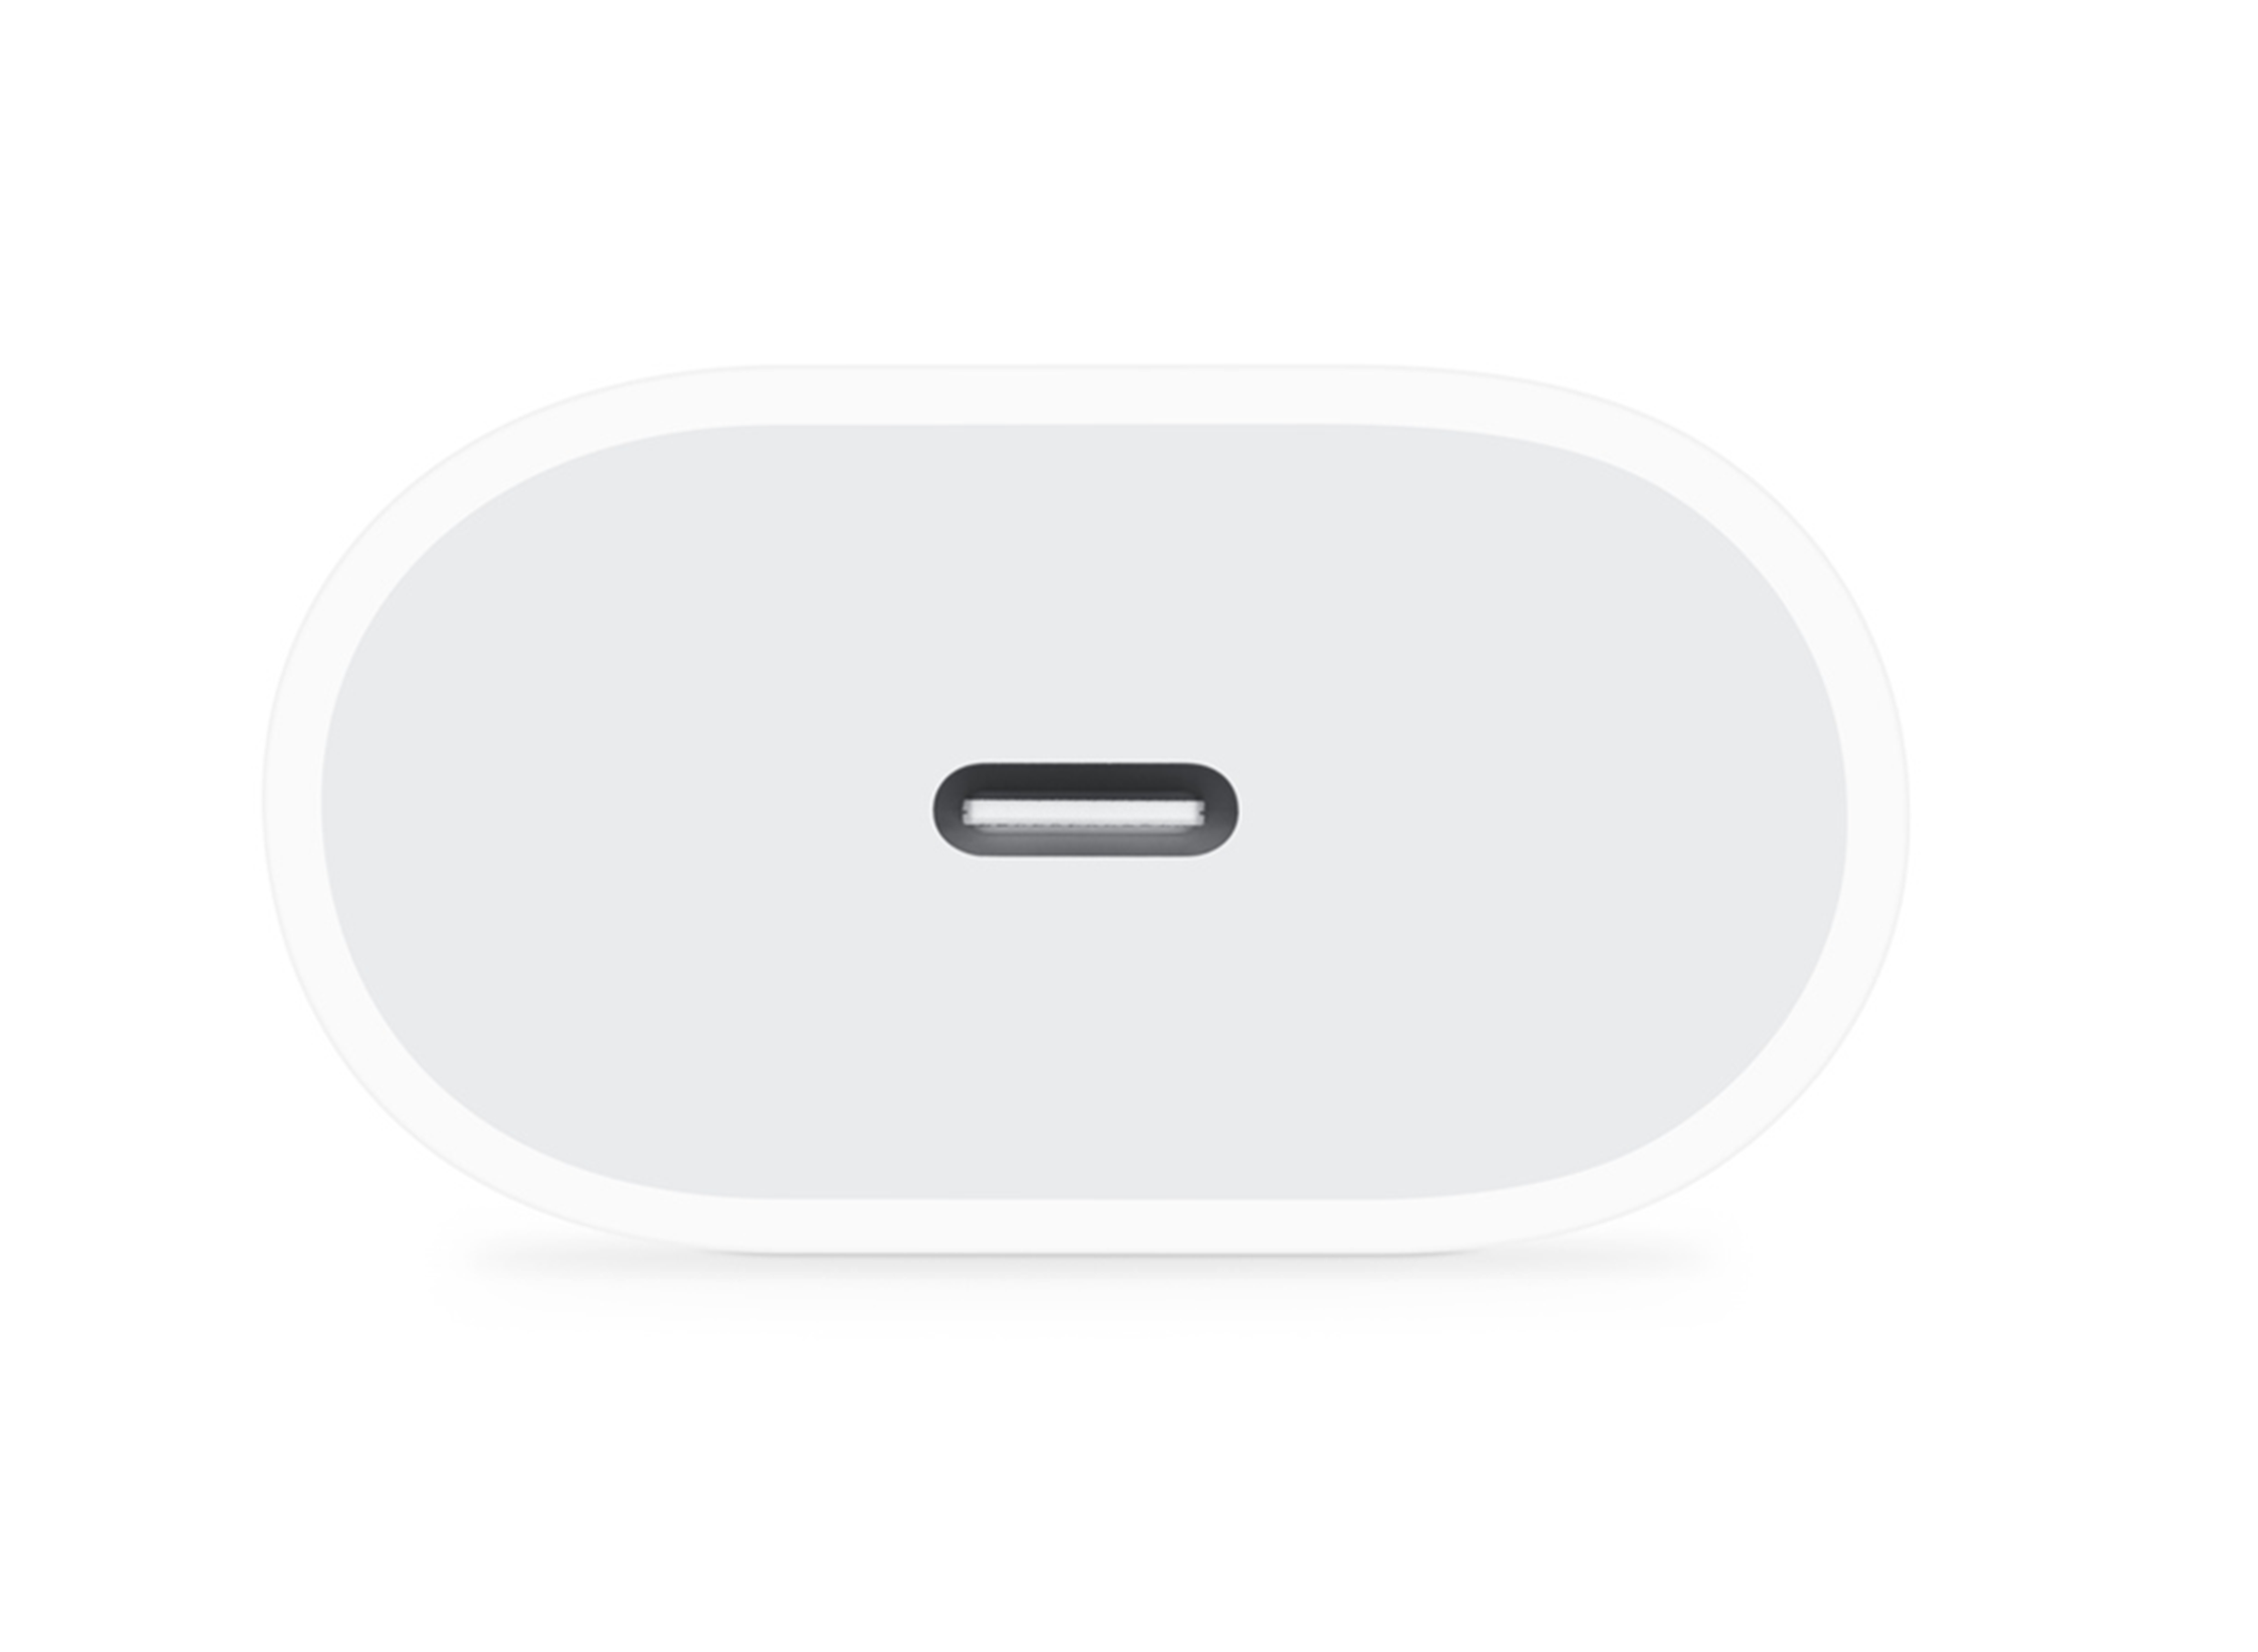 Apple iPhone 15 20W Ladegerät MHJJ83ZM/A + 1m USB‑C auf USB-C MQKJ3ZM/A Ladekabel